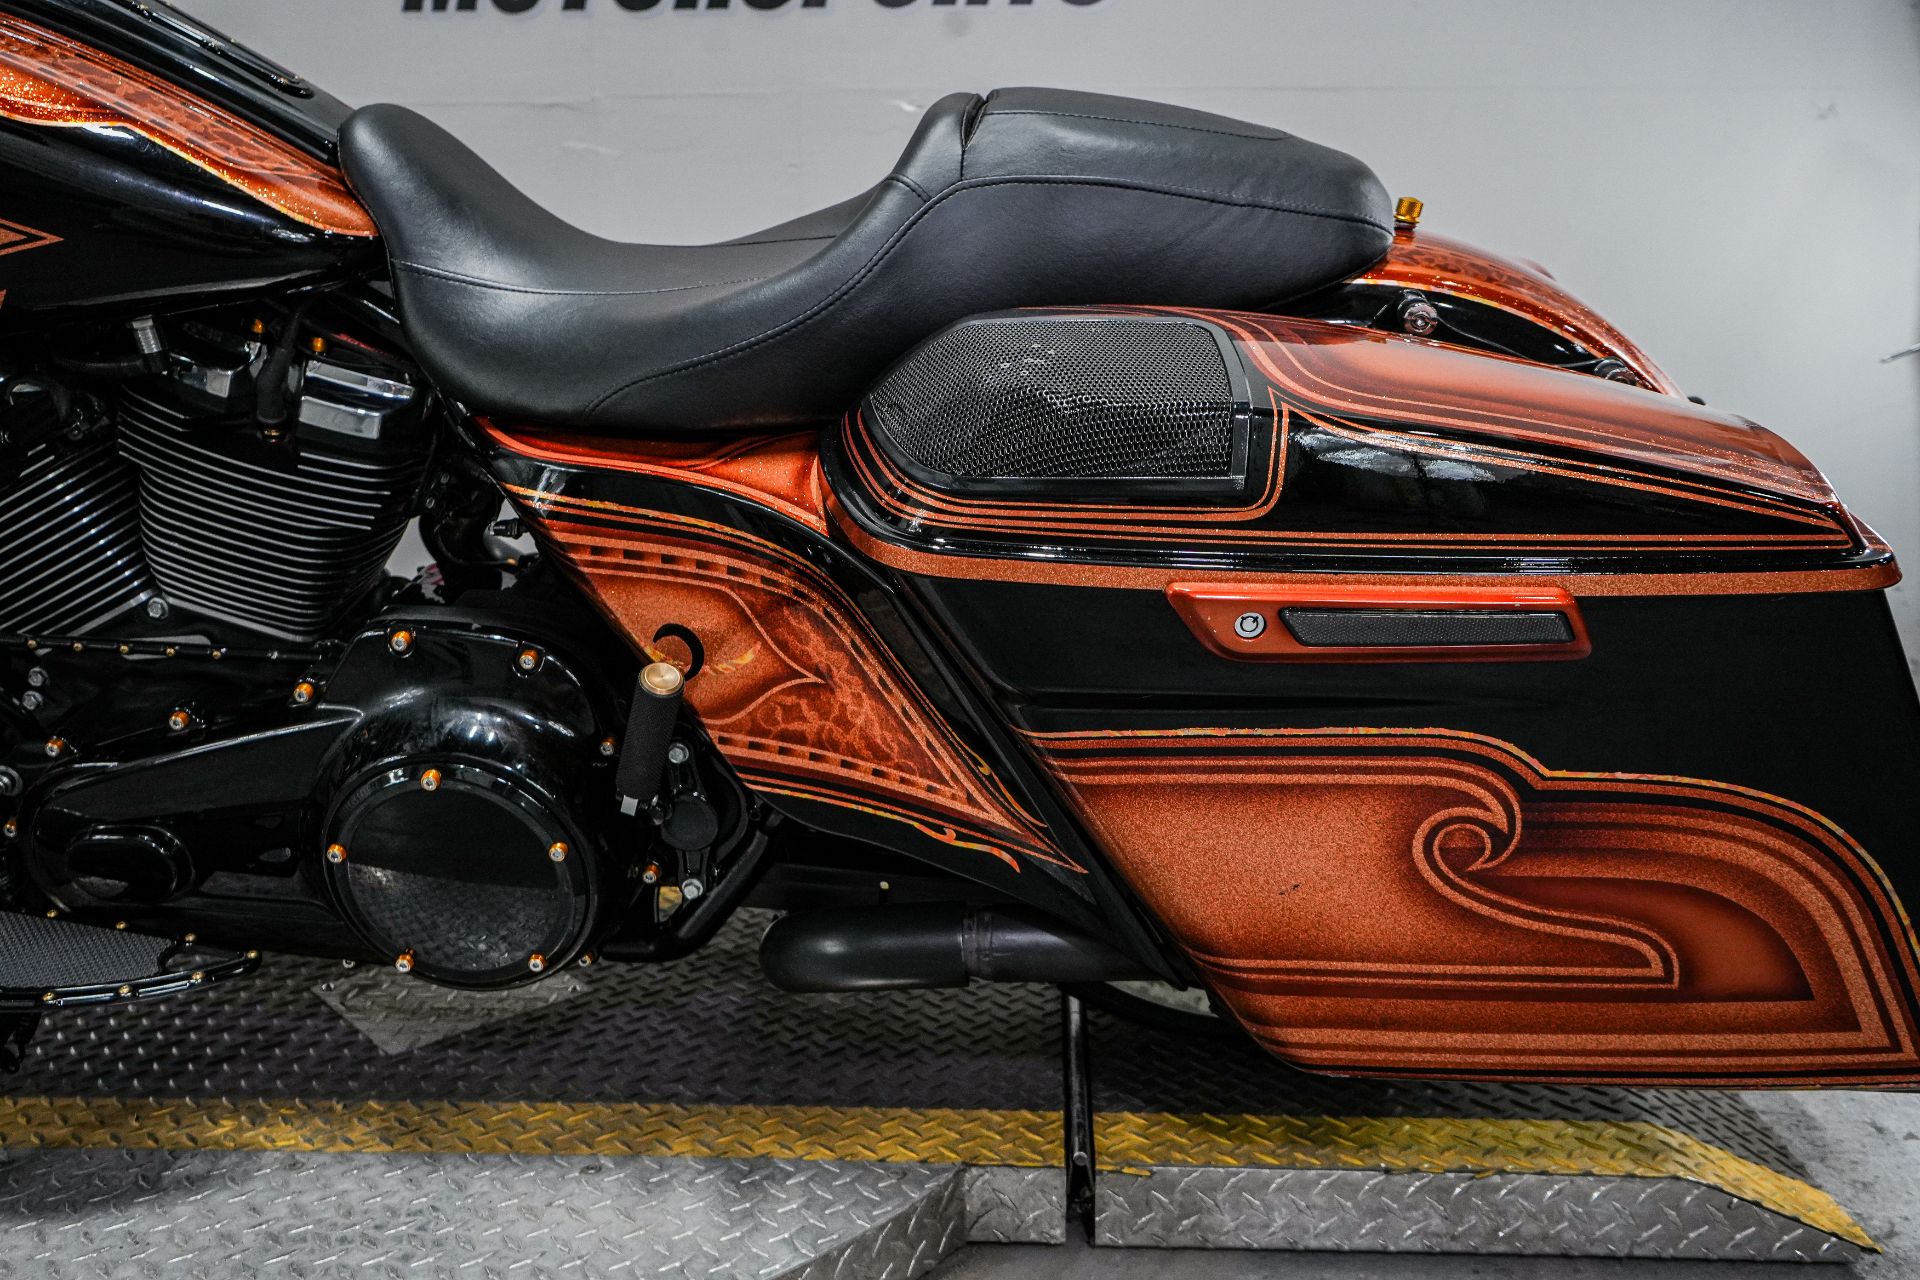 2018 Harley-Davidson Road Glide® Special in Sacramento, California - Photo 6